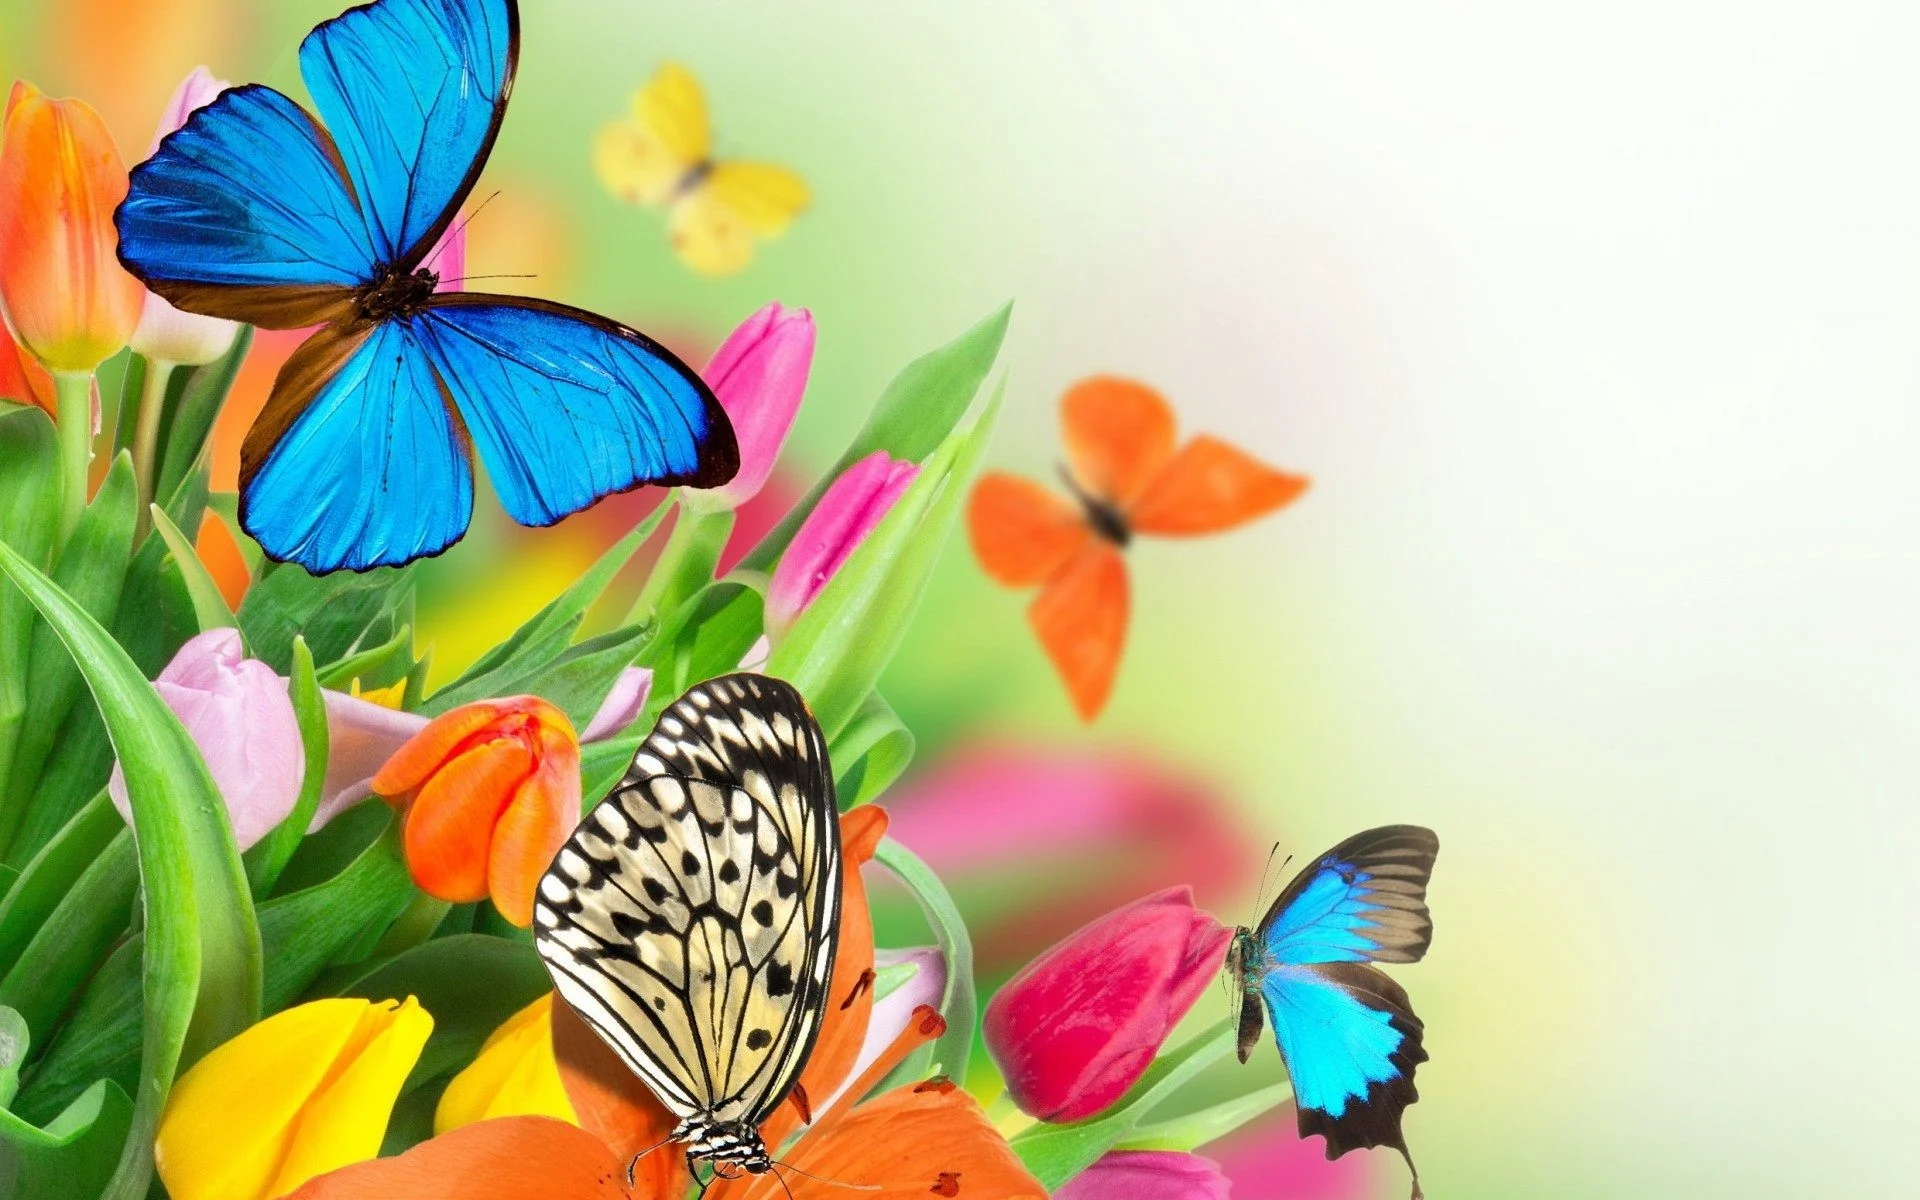 Colorful Butterfly On Flower Wallpaper For Desktop amp Mobile